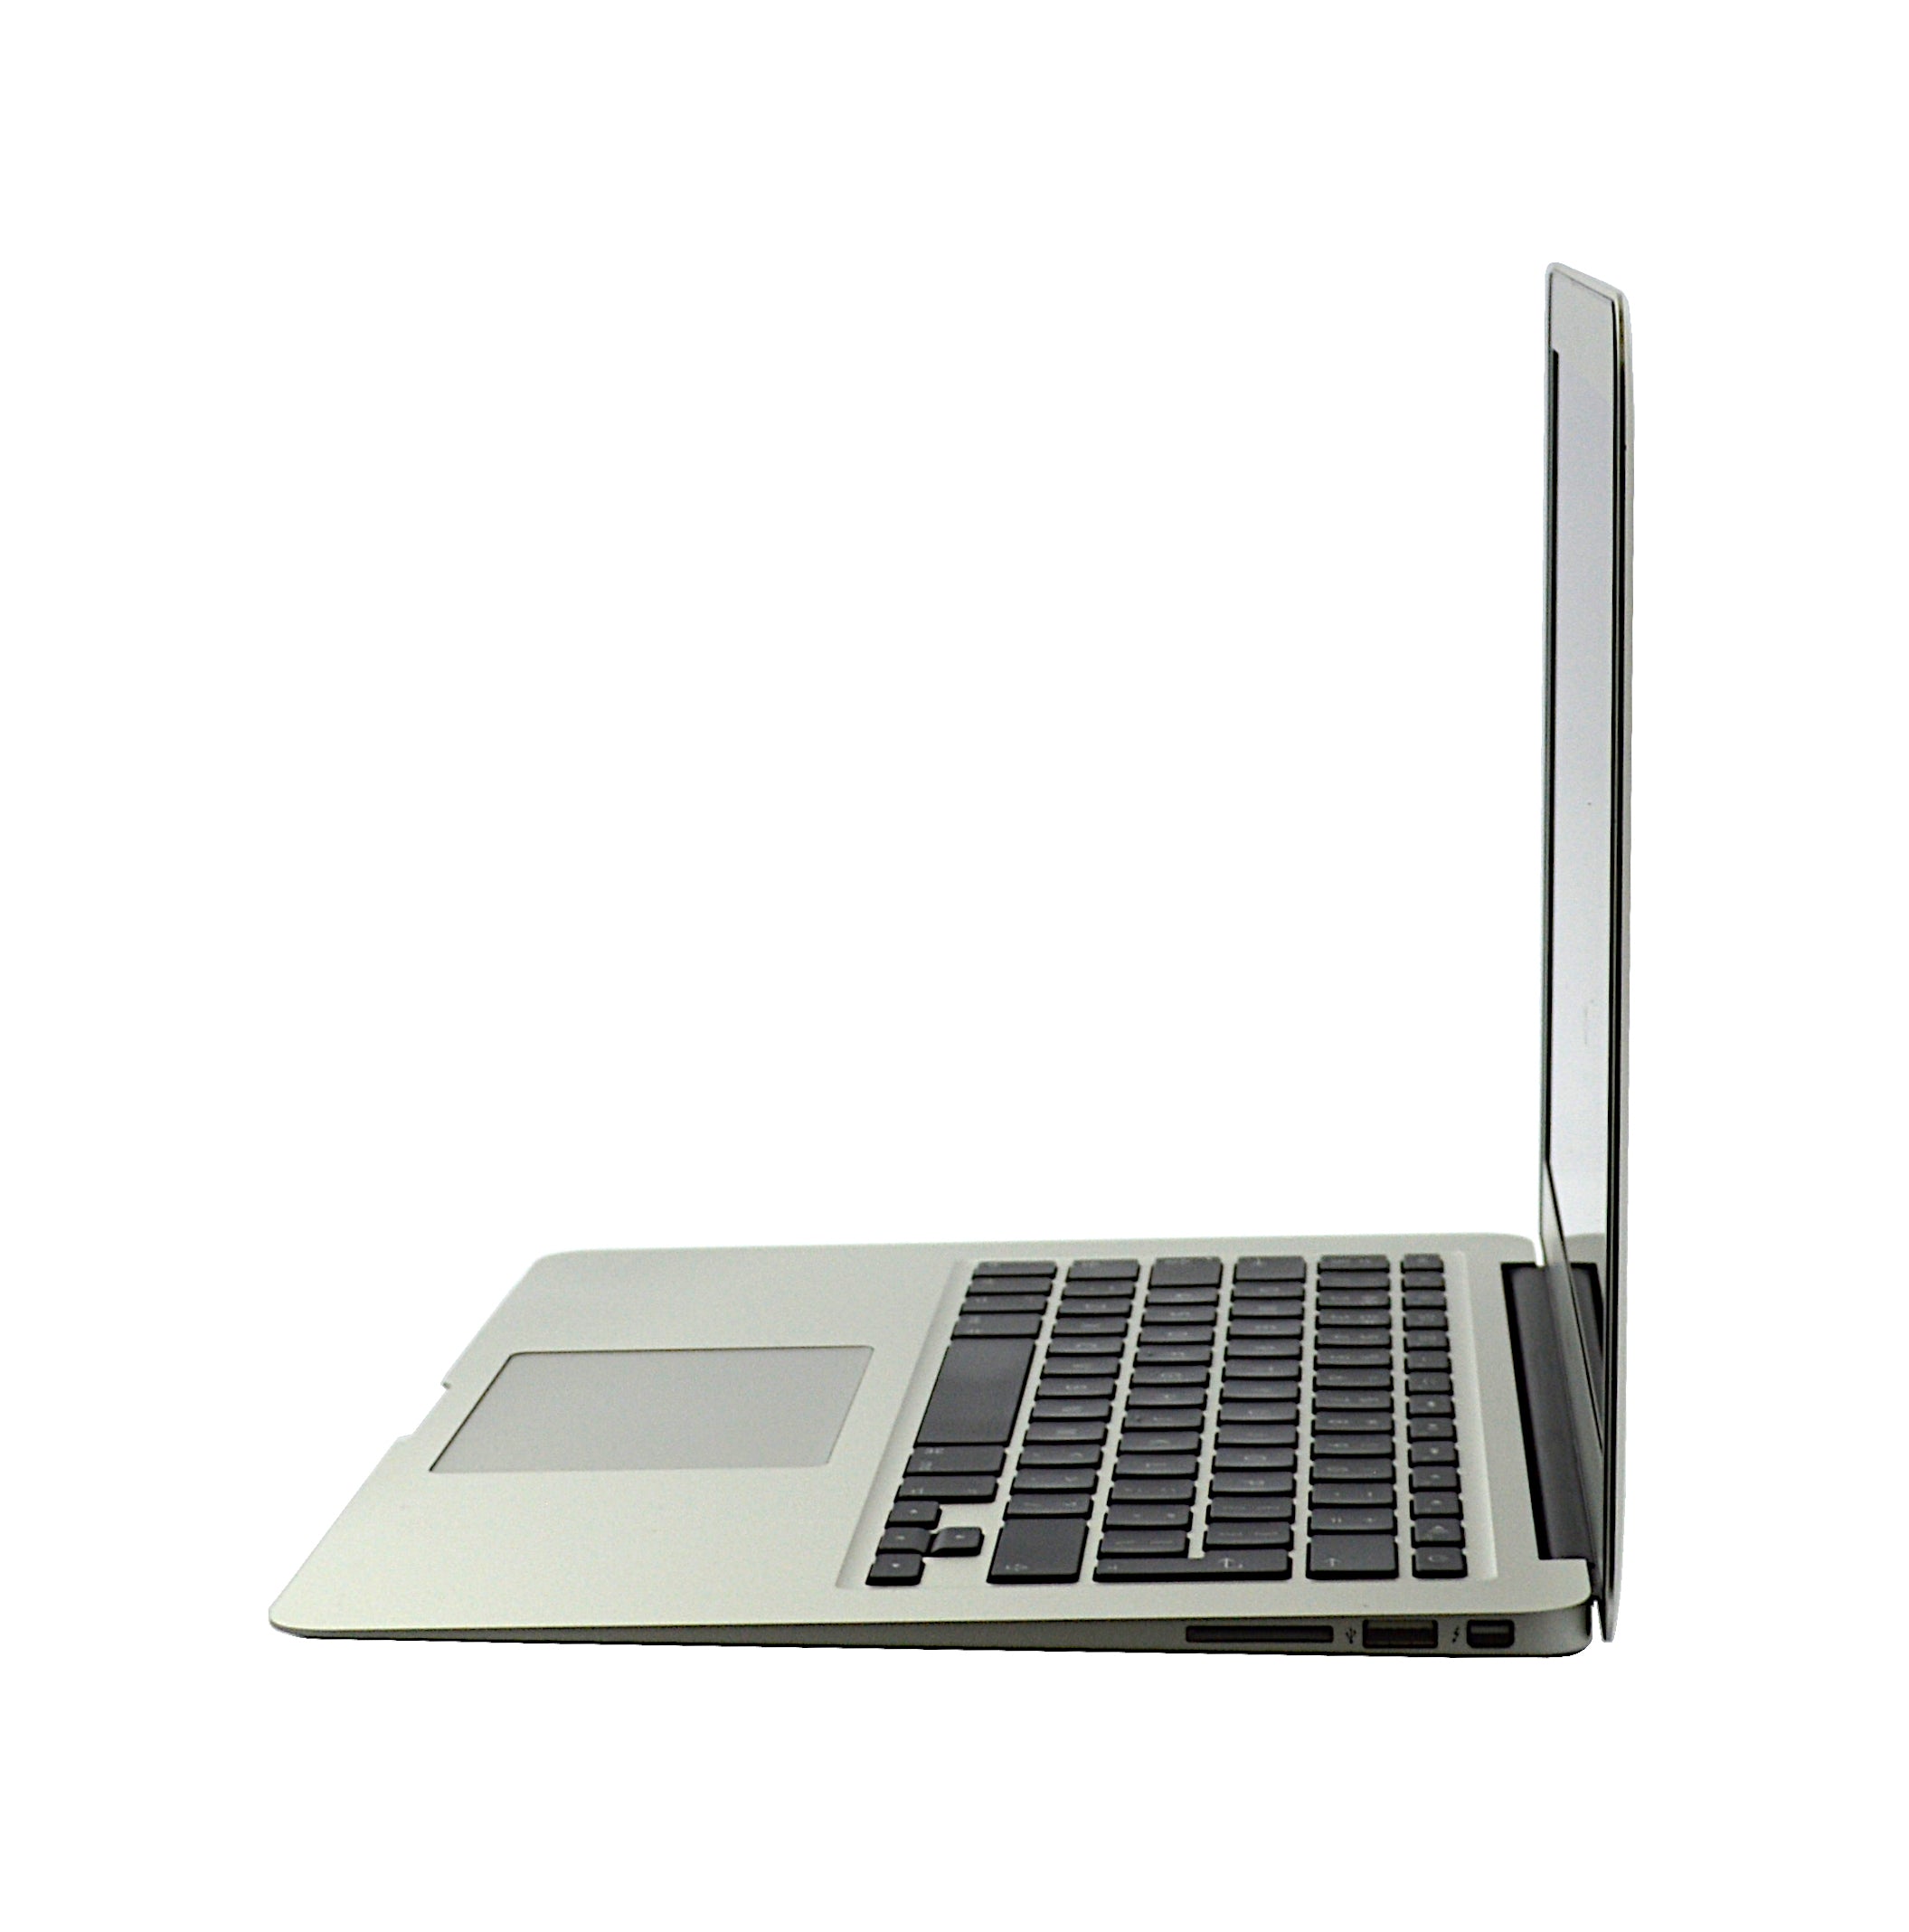 Apple MacBook Air 2013 Laptop, 13" Core™ i5 4th Gen, 8GB RAM, 256GB SSD, Big Sur